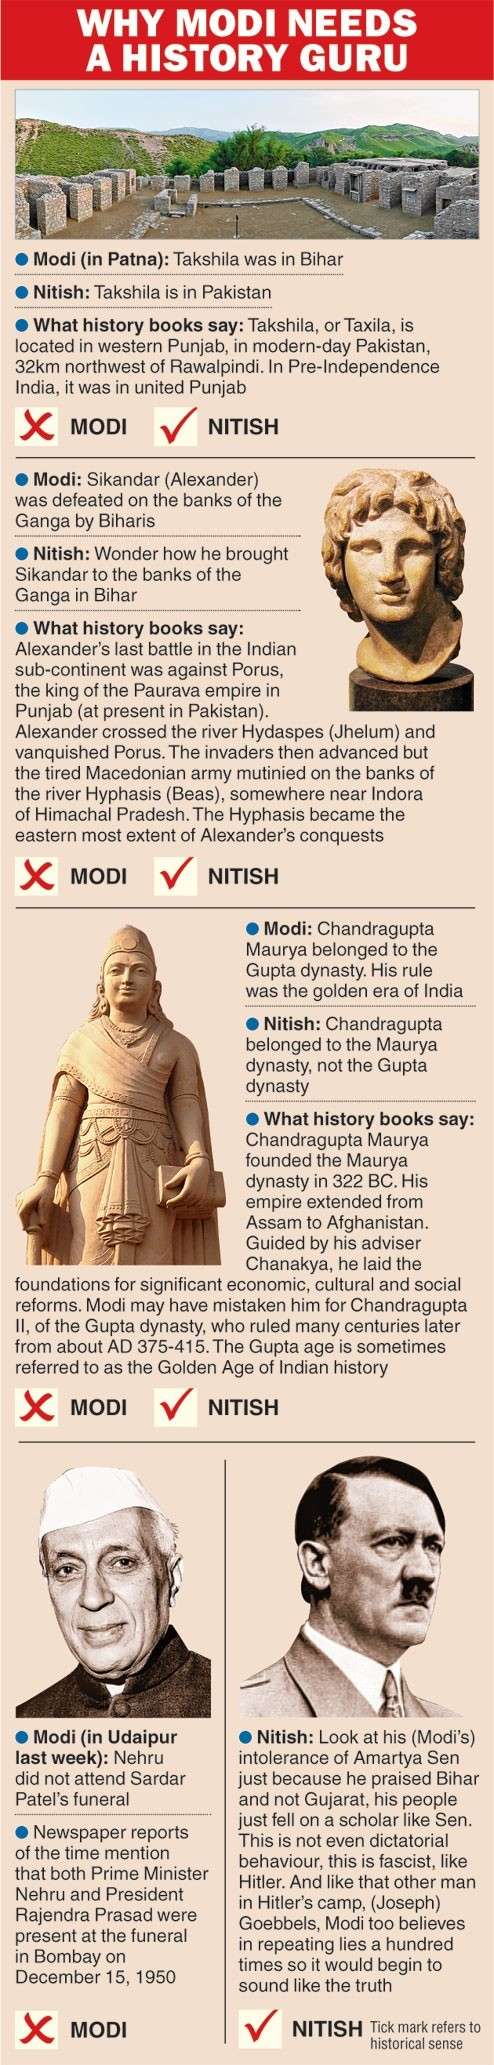 Now Nitish Kumar compares Narendra Modi to Hitler Image10